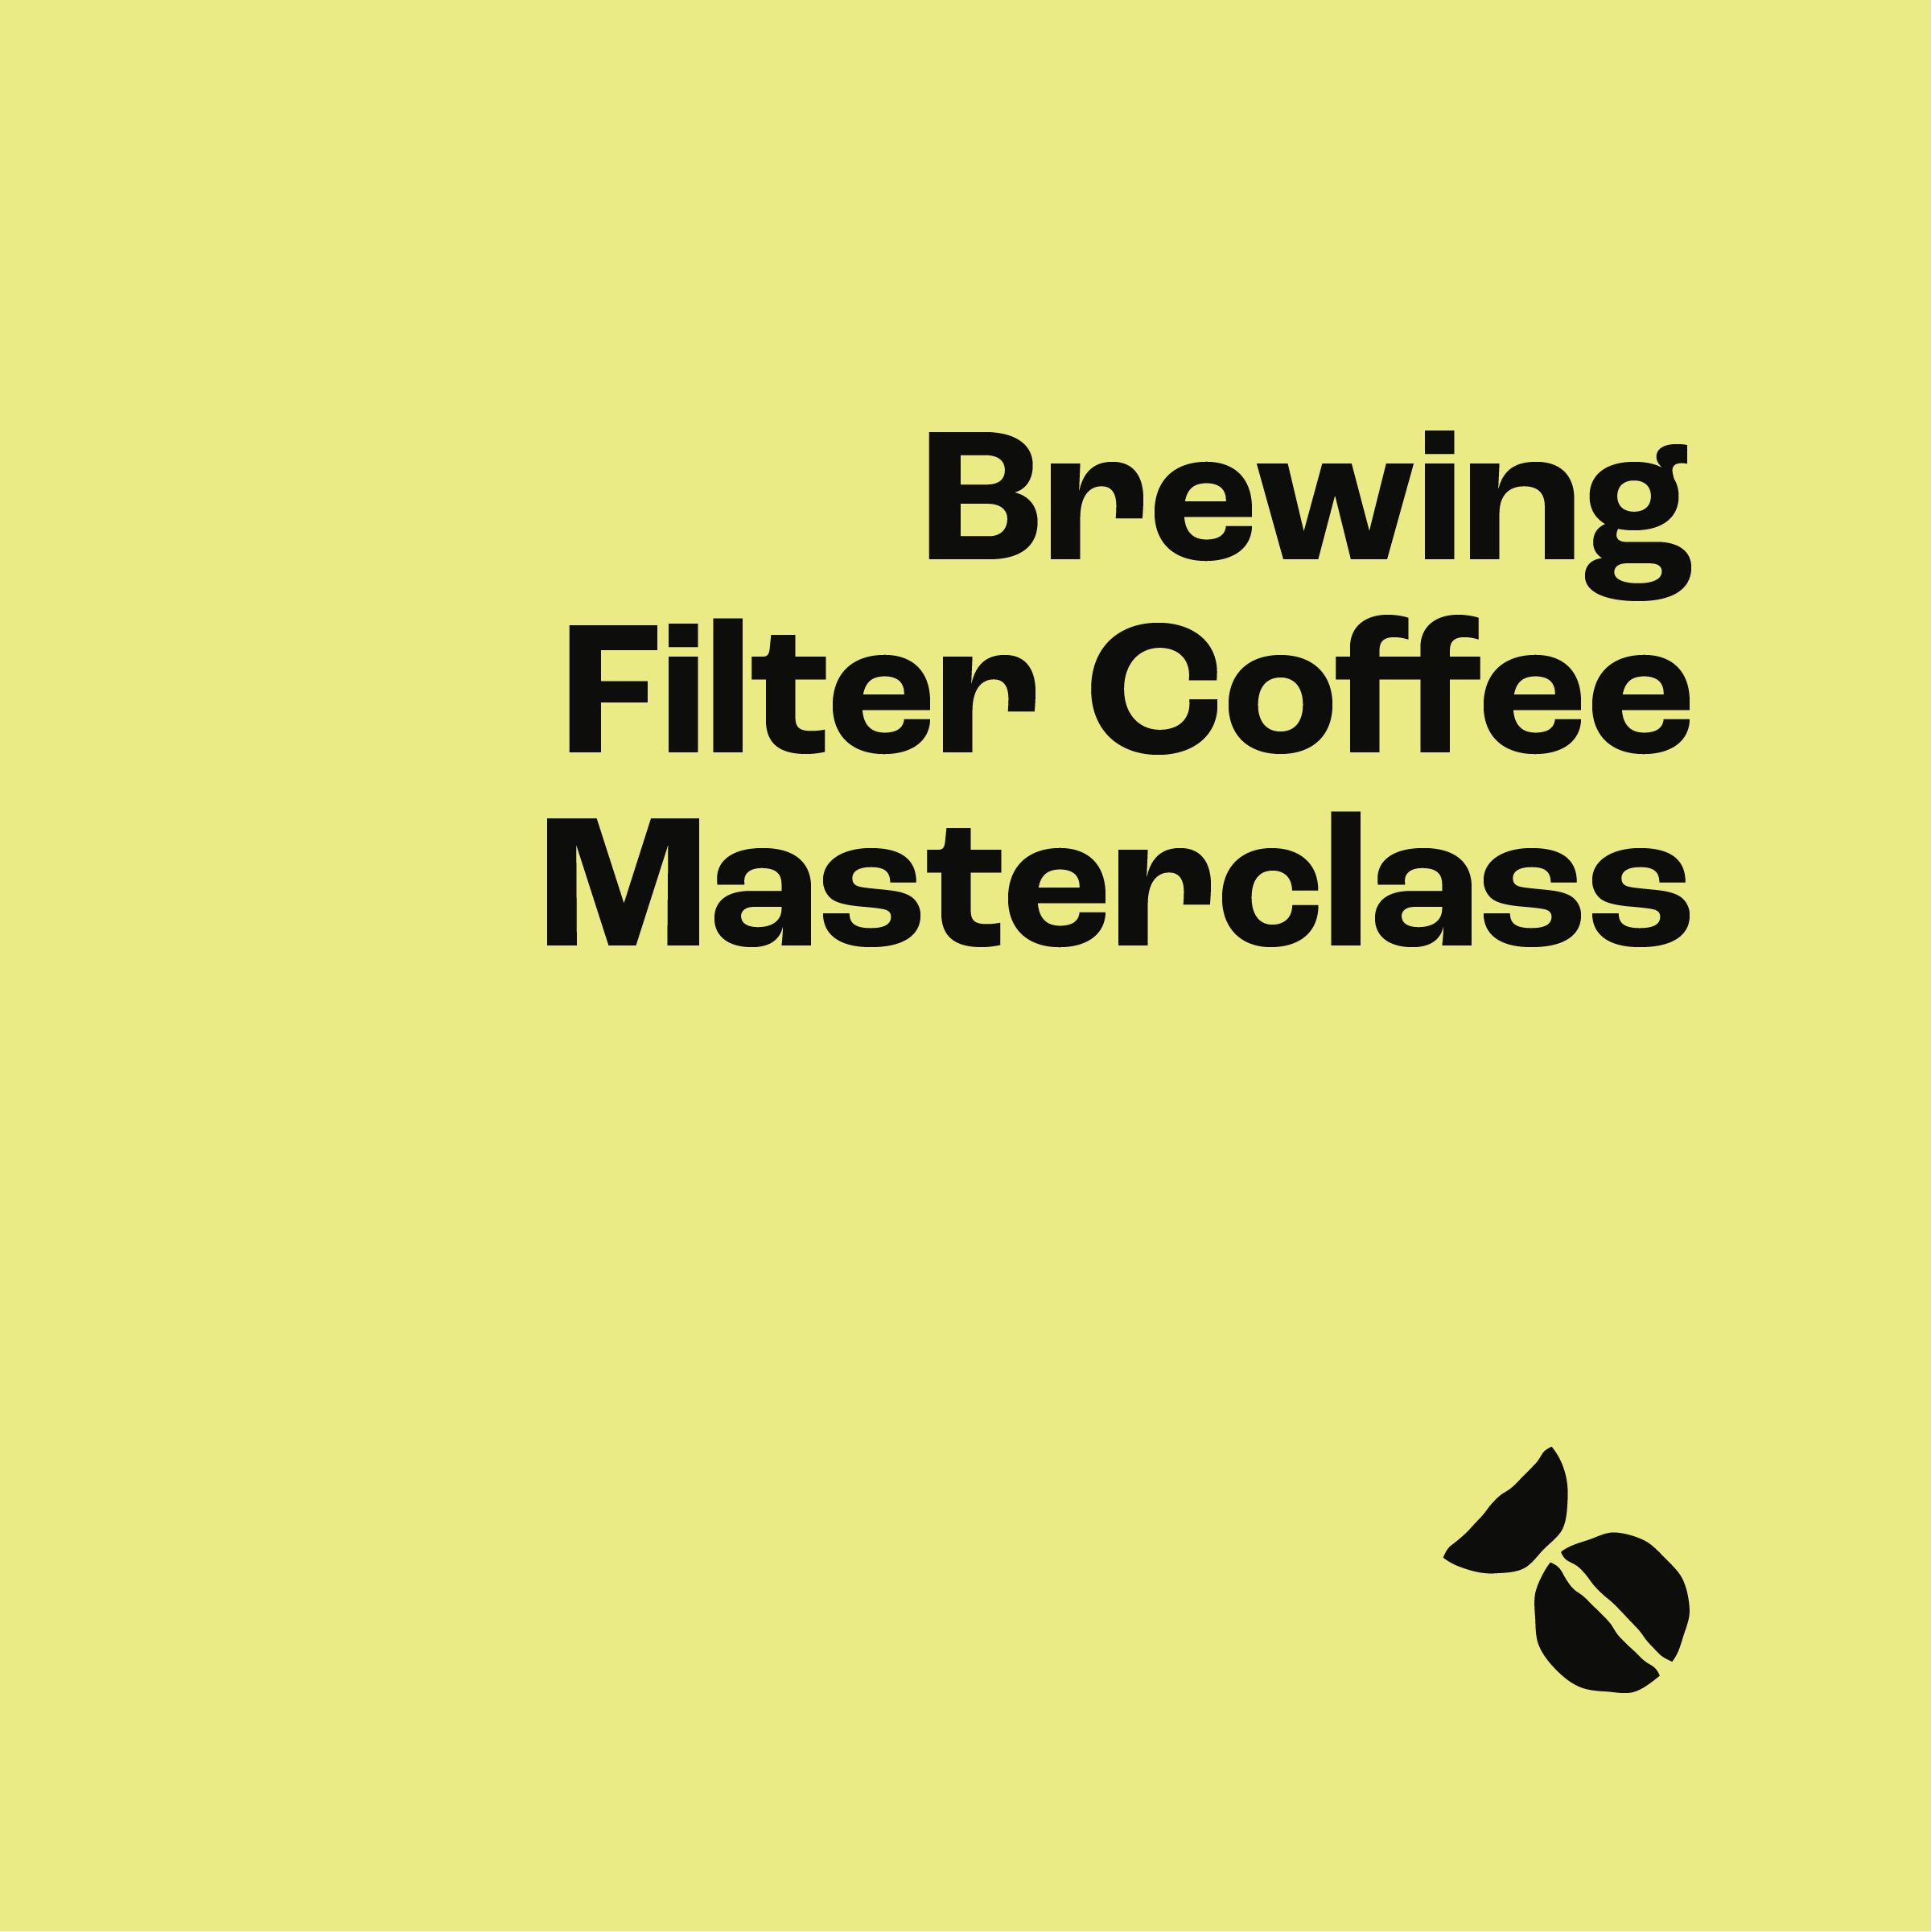 Brewing Filter Coffee - Masterclass